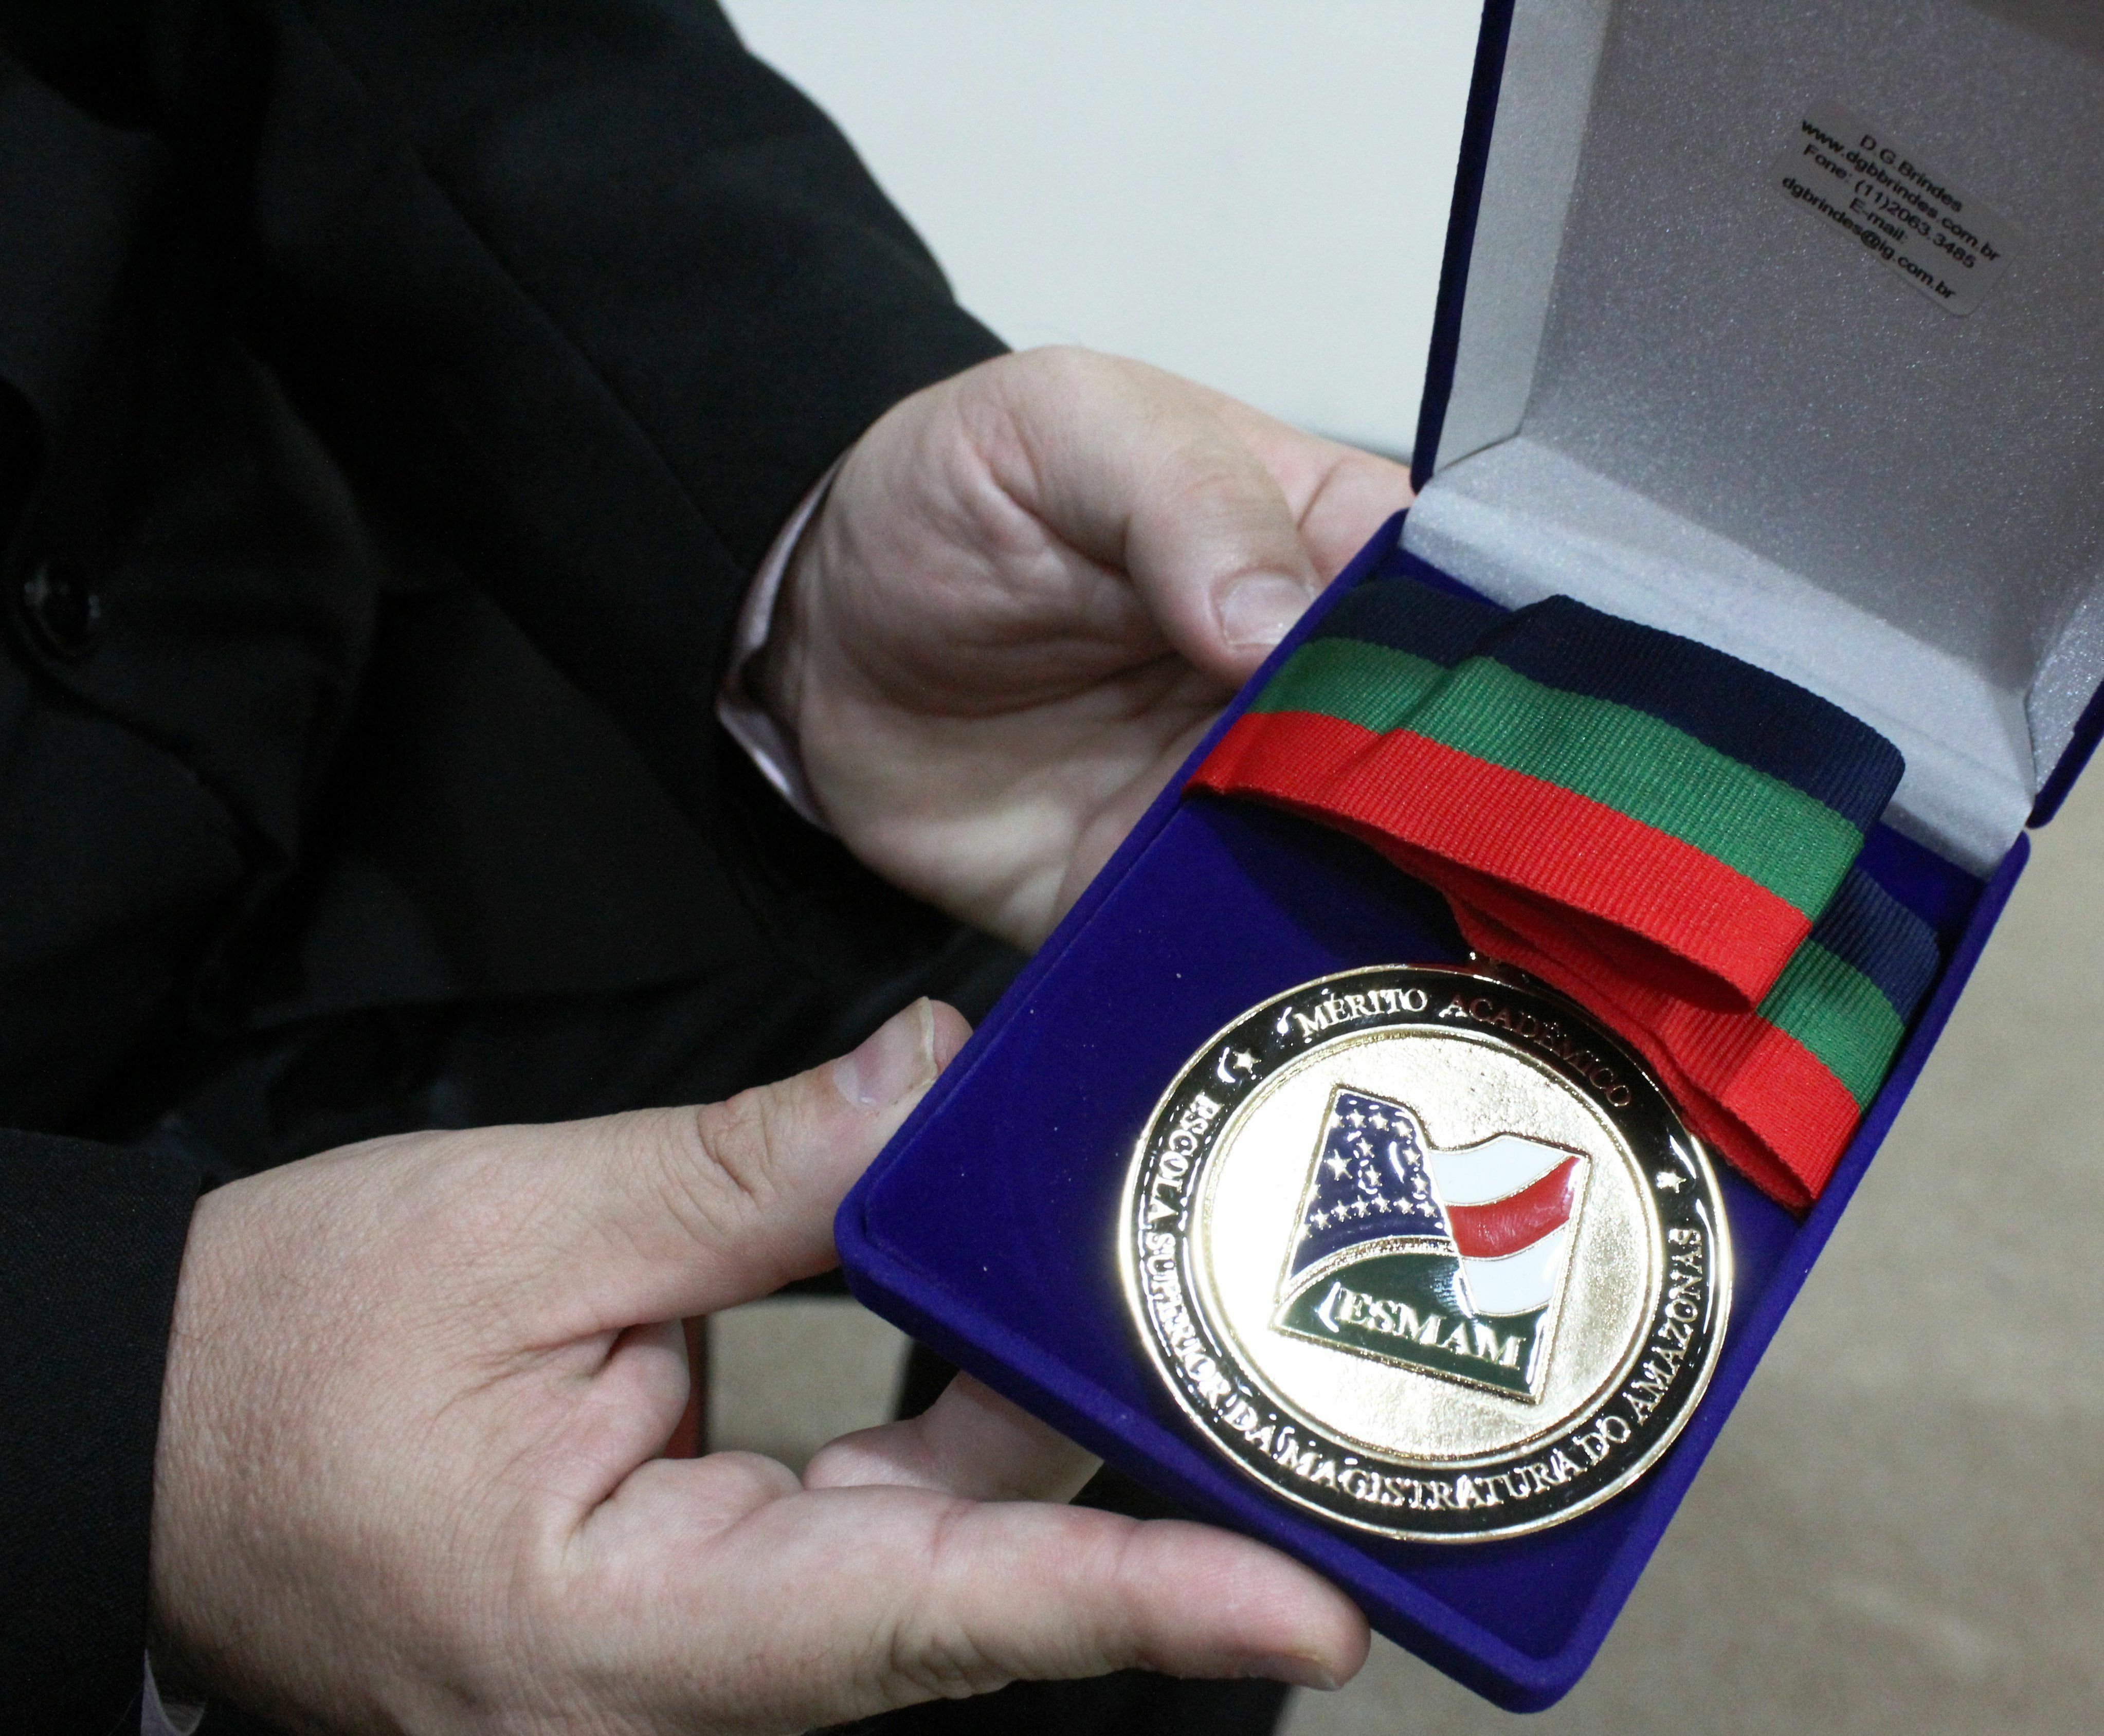 Medalha é conferida a personalidades locais desde o ano 2012